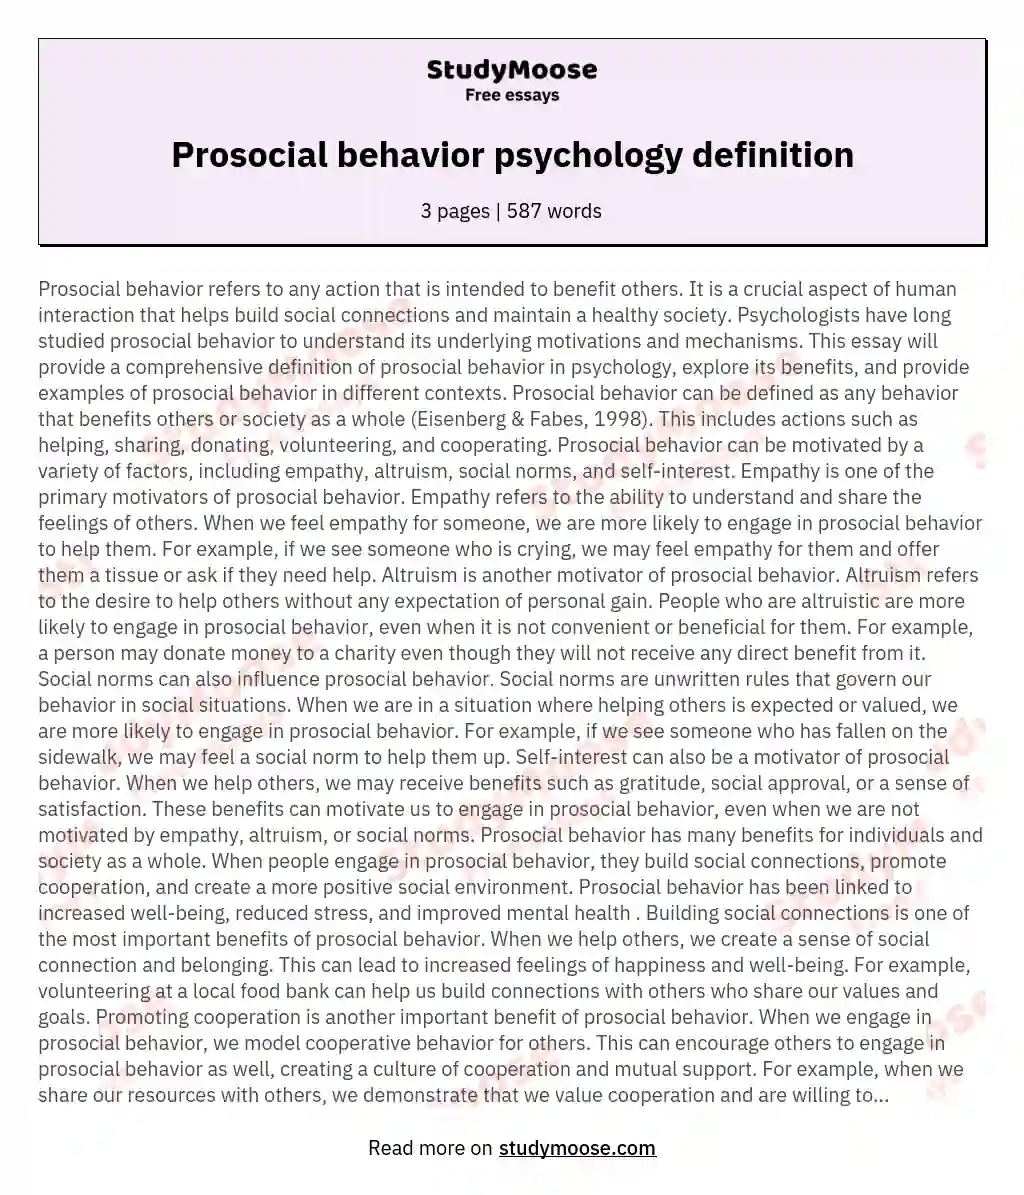 Prosocial behavior psychology definition essay